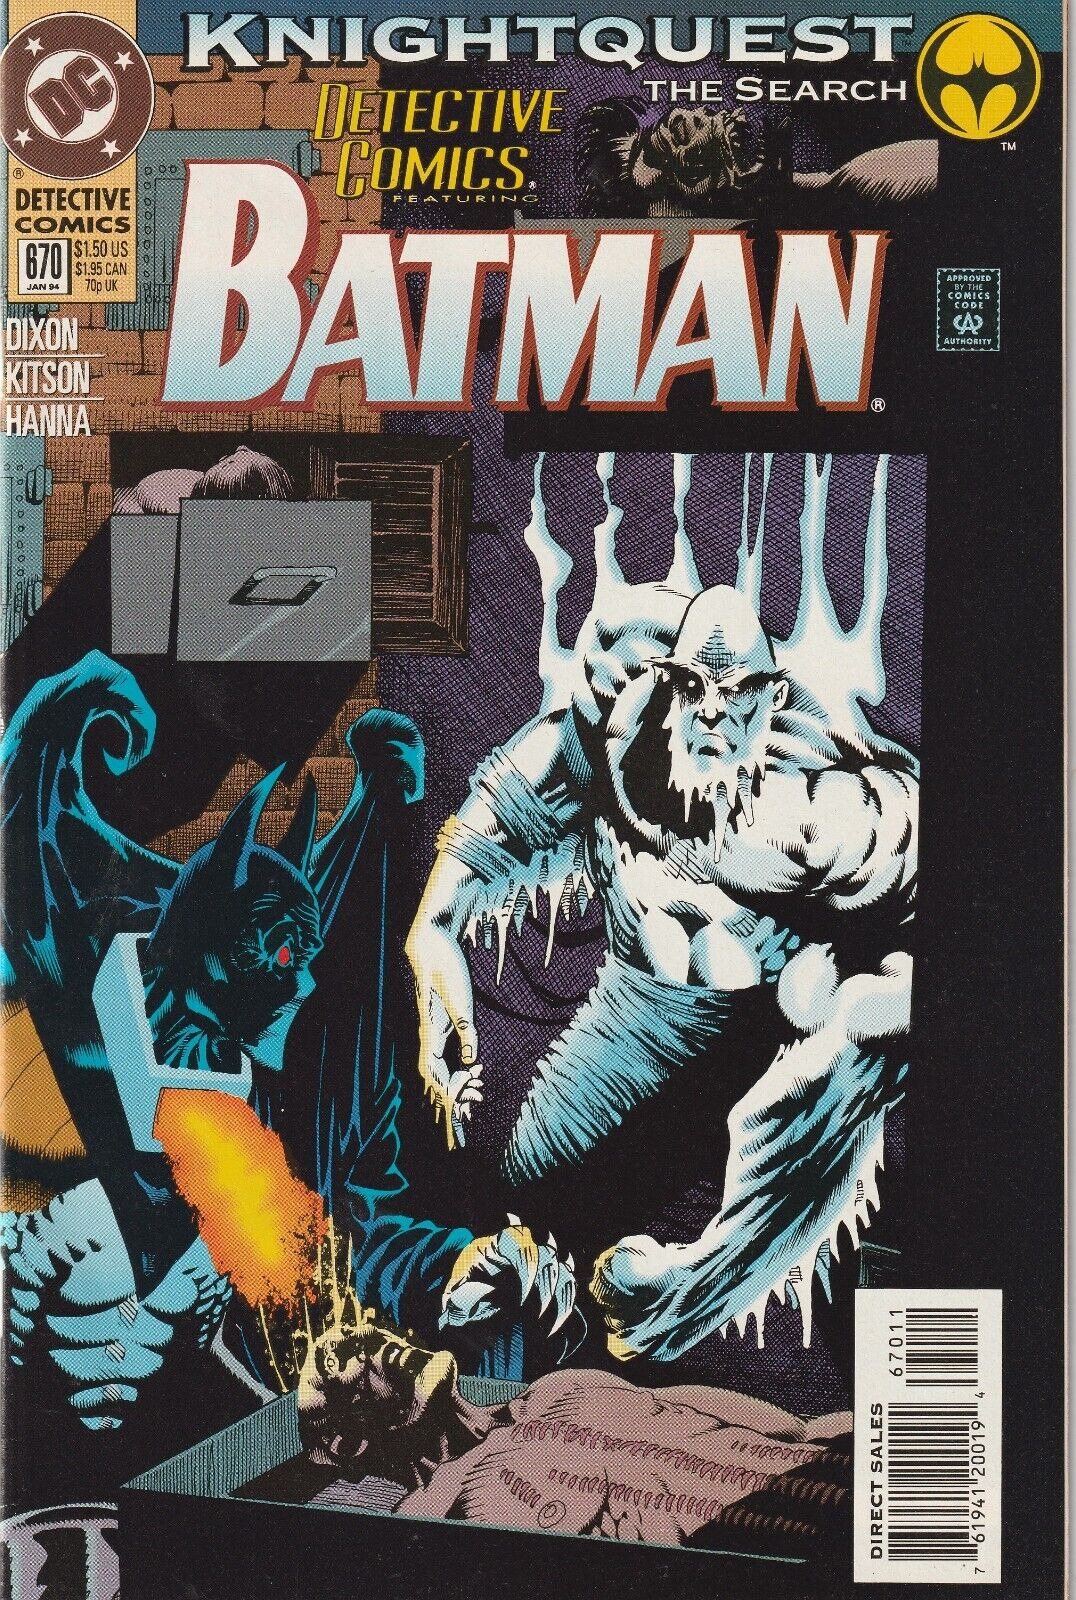 BATMAN DETECTIVE COMICS  #670  KNIGHTQUEST   MISTER FREEZE  DC  1993  NICE